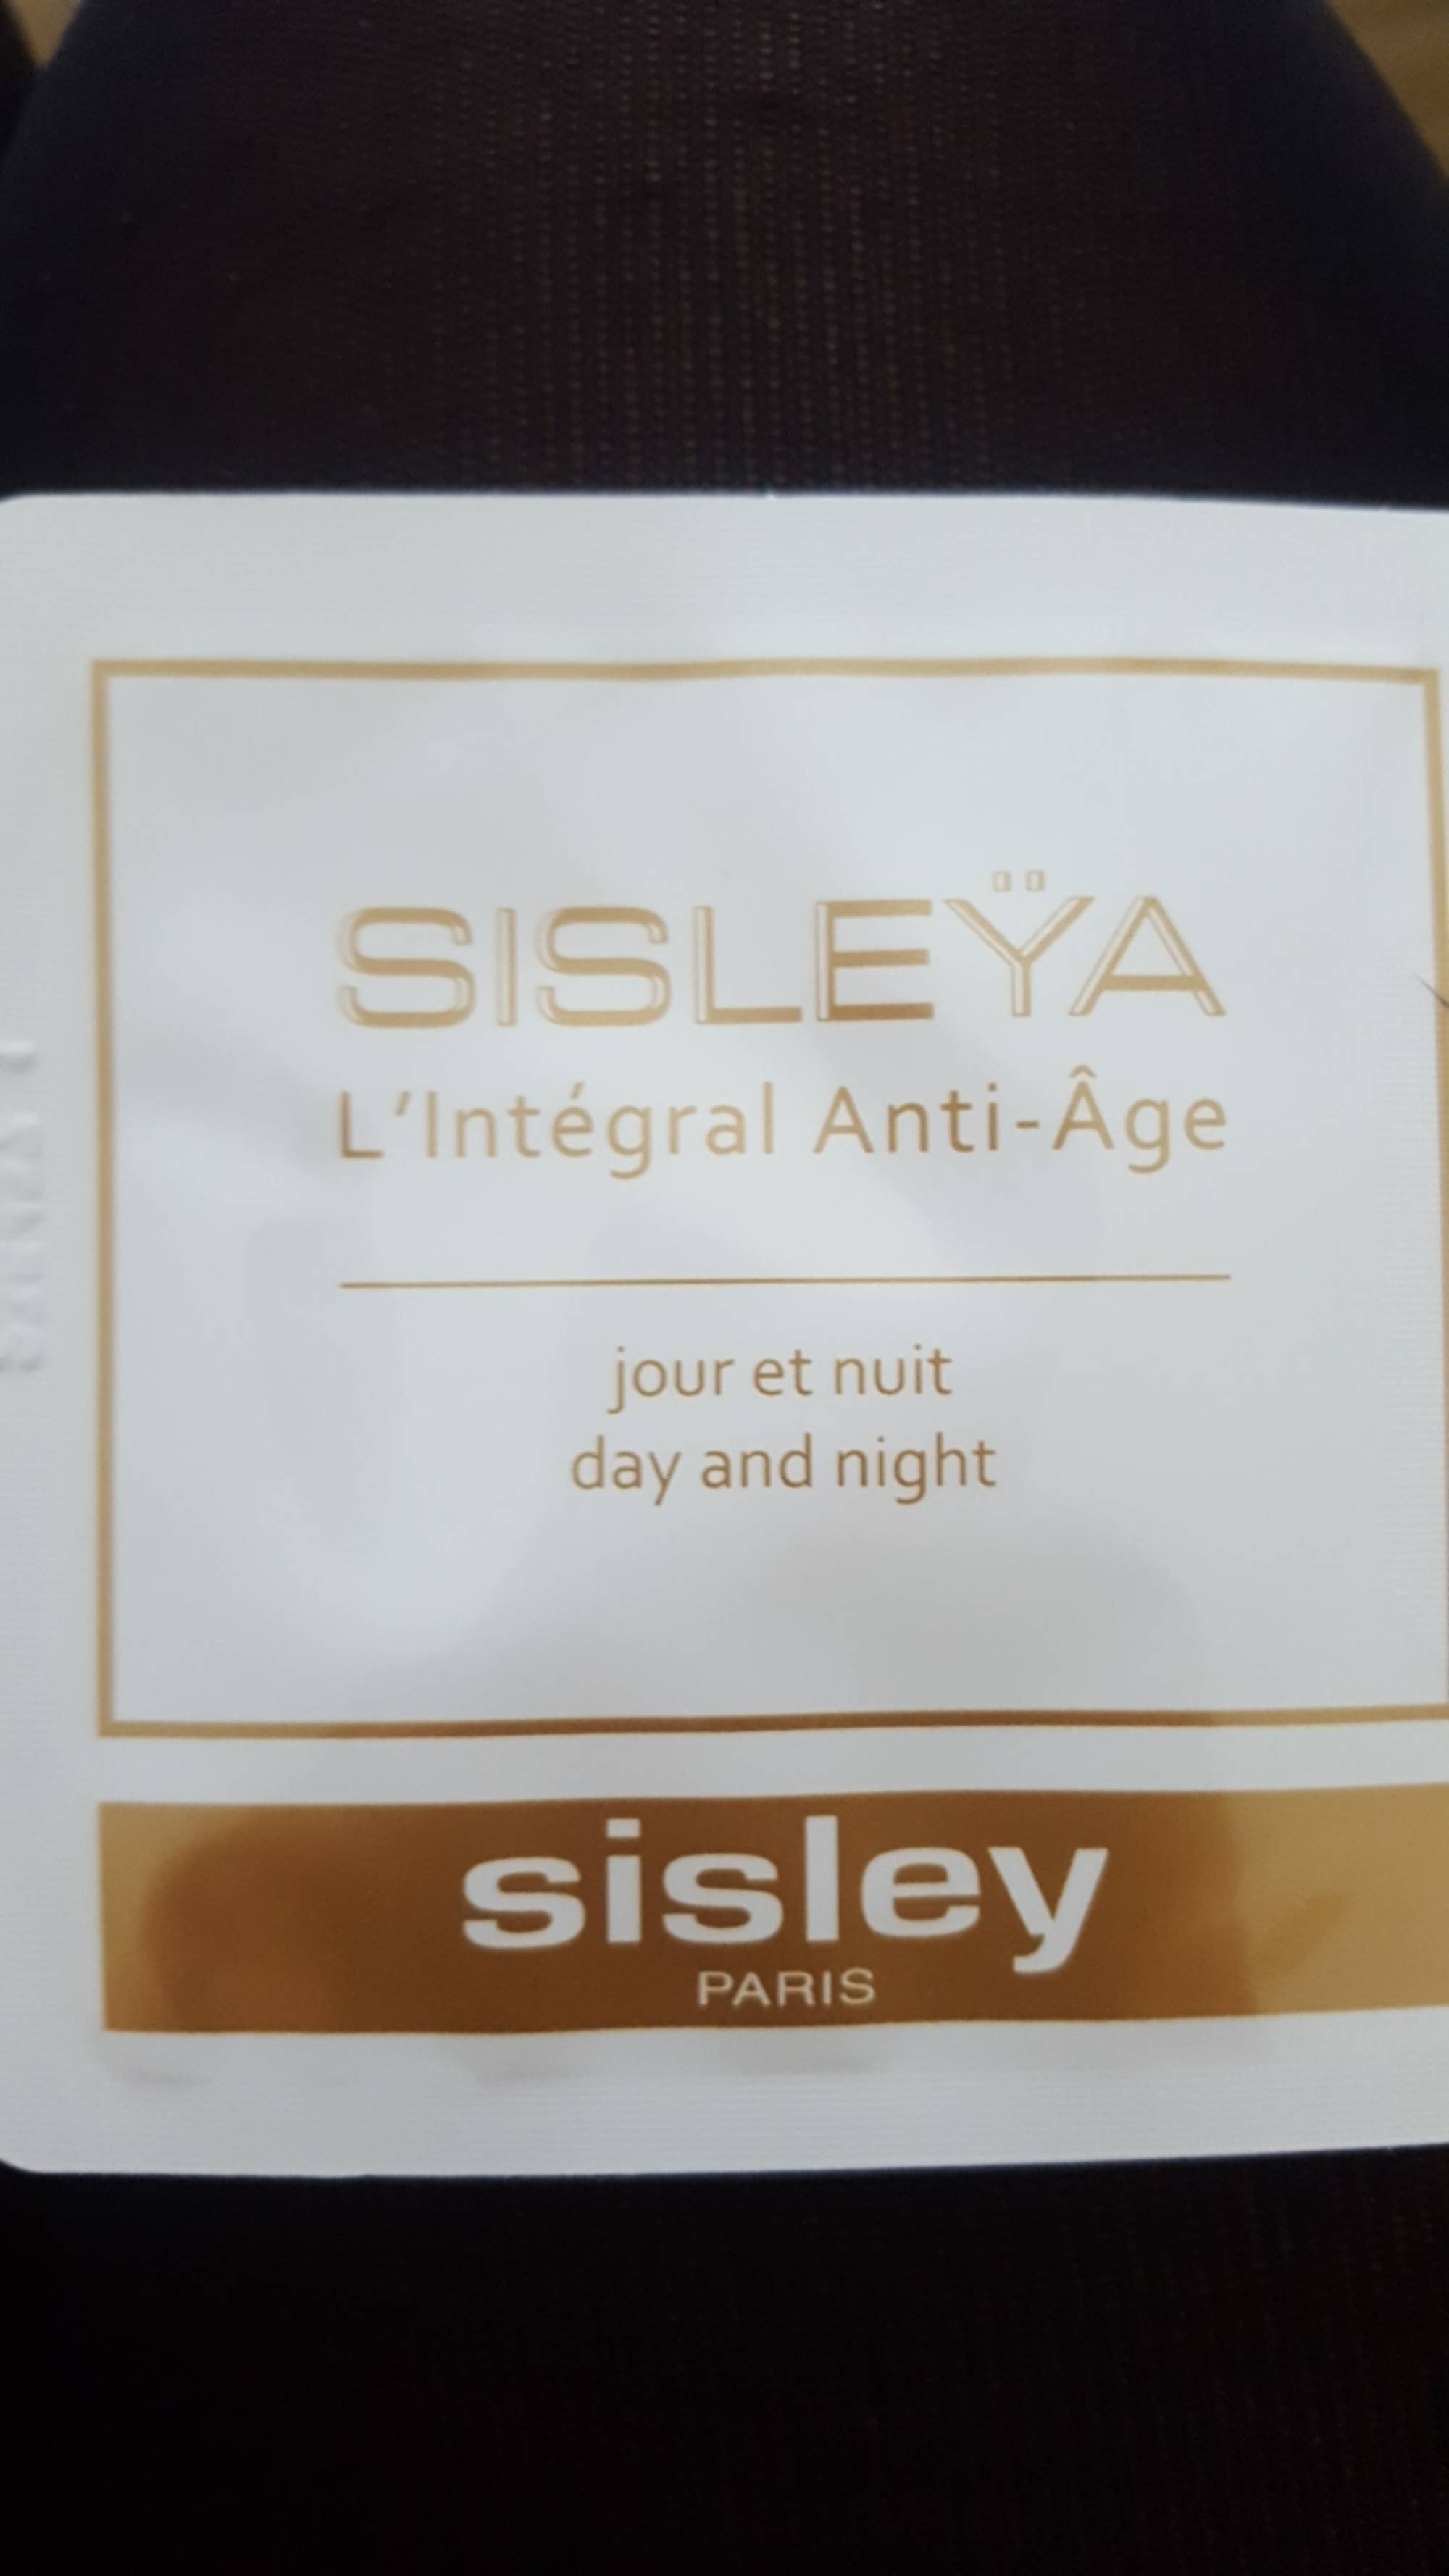 SISLEY - Sisleÿa - L'intégral anti-âge jour et nuit